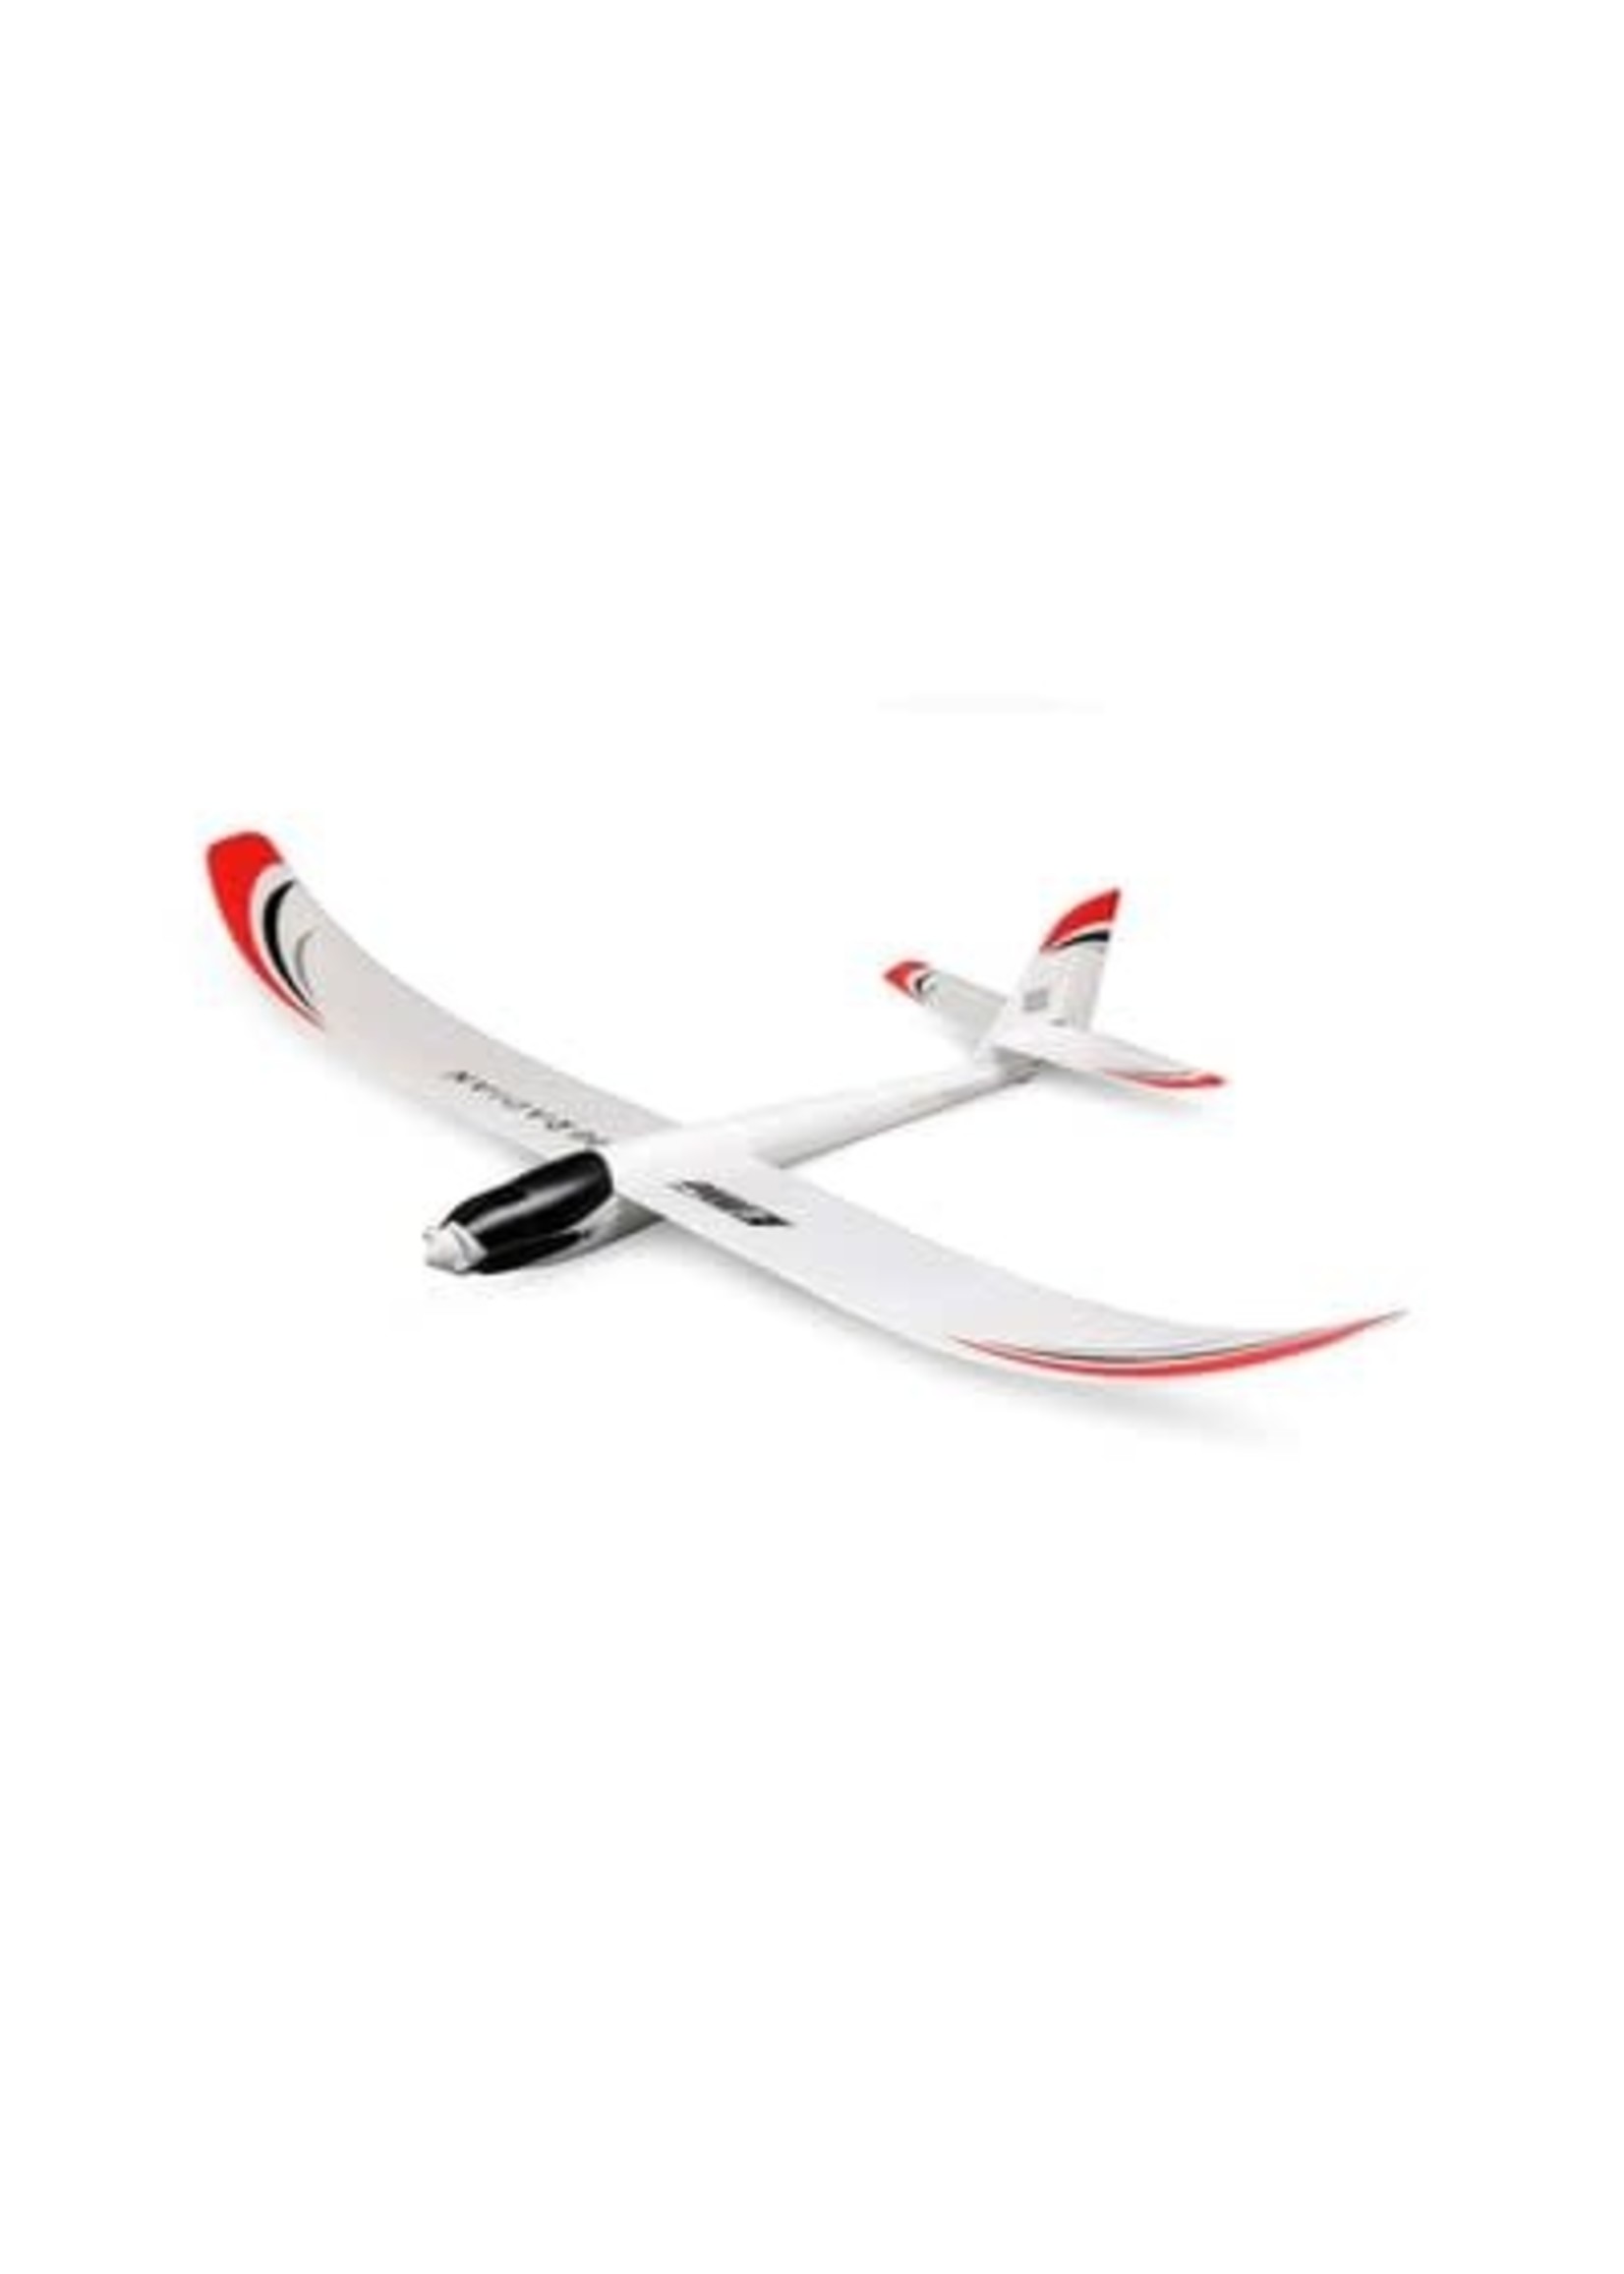 E-Flite EFLU2950 E-flite UMX Radian Bind-N-Fly Basic Electric Airplane (730mm) w/AS3X & SAFE